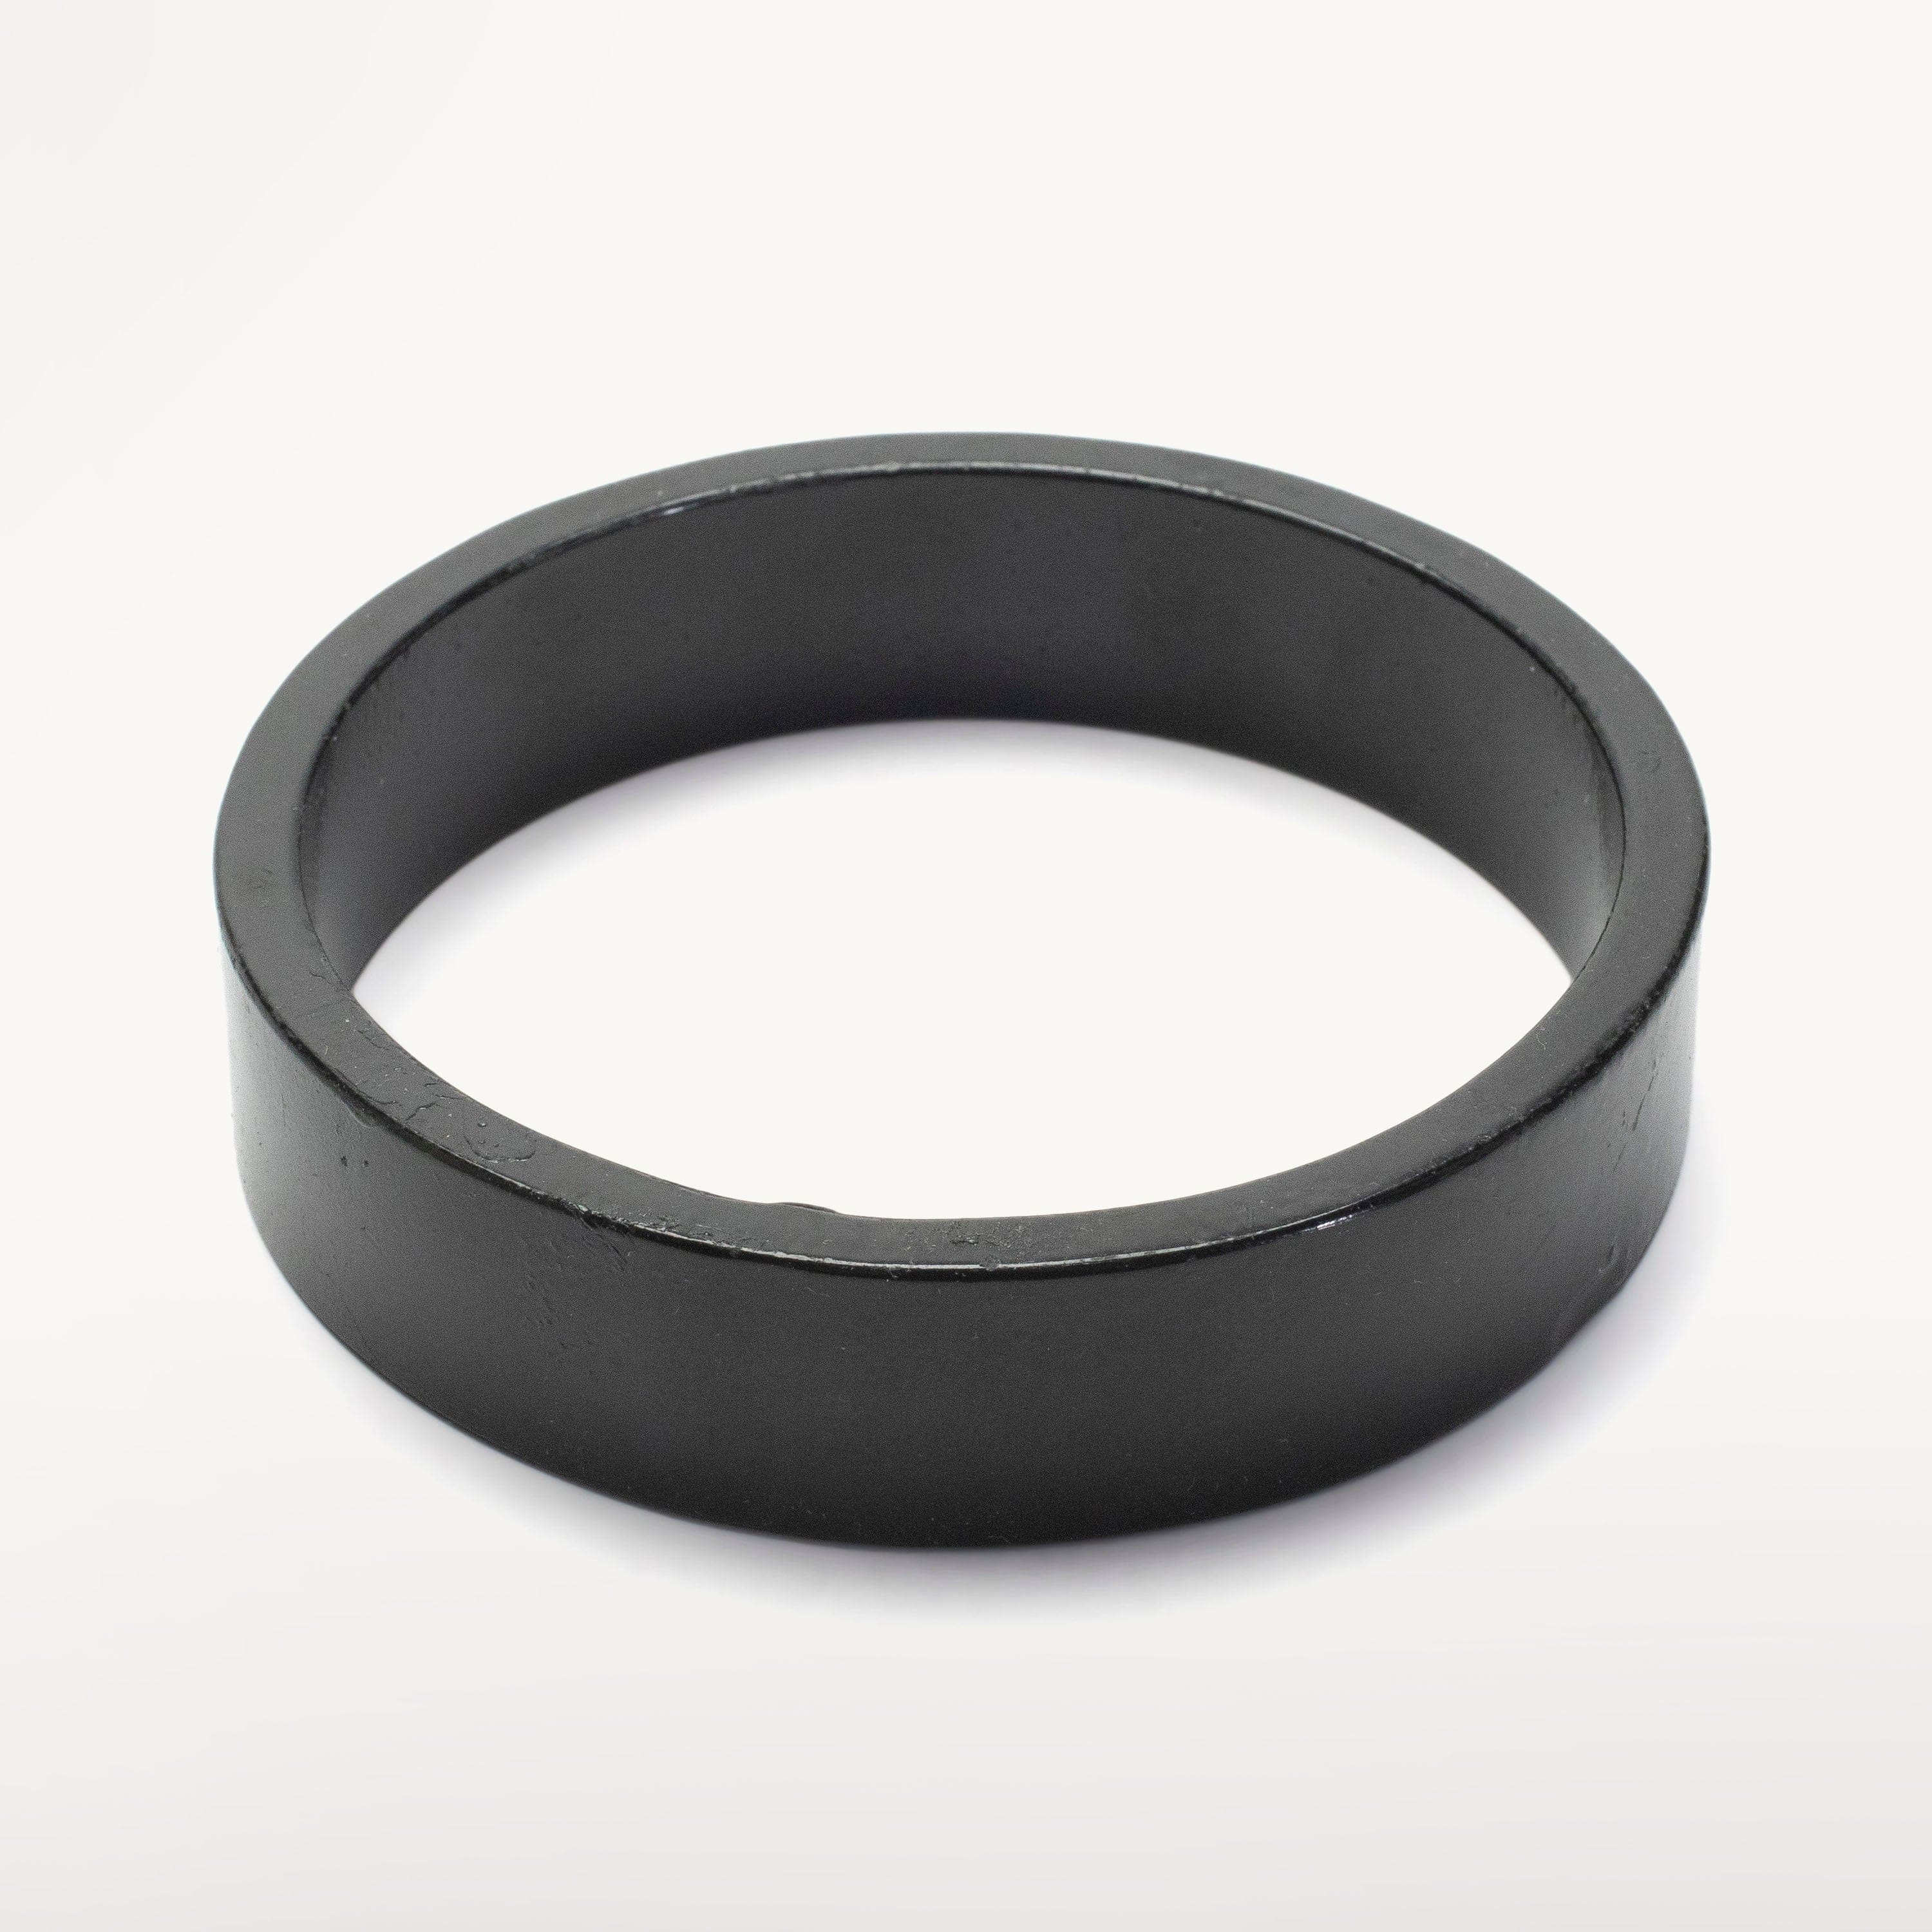 Kalifano Black Metal Ring Sphere Stand - 6 cm / 2.5" MS6